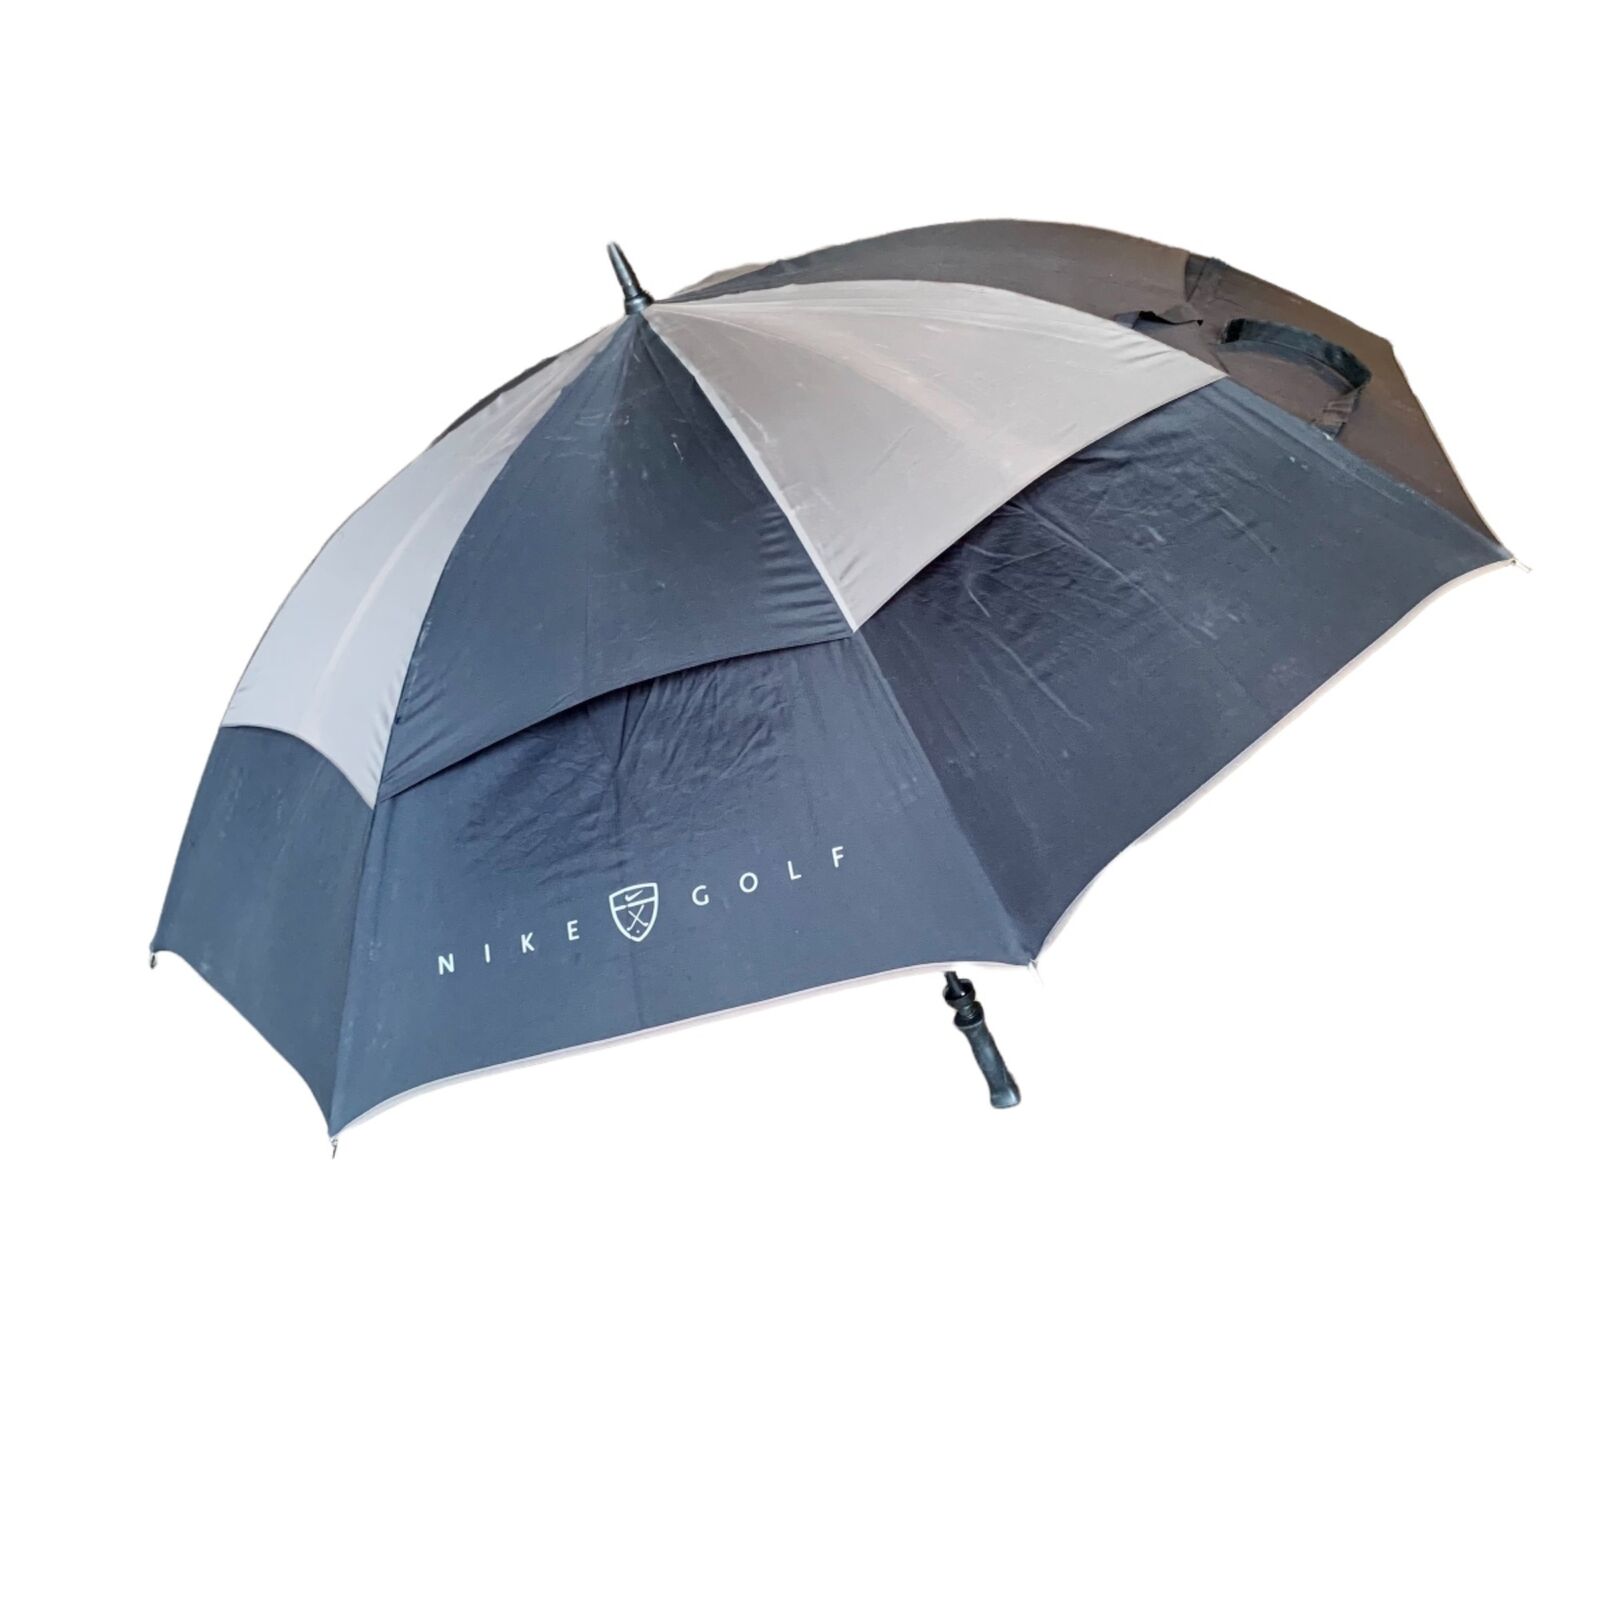 Nike Golf Umbrella Grey Black Large Two Tone 8 Panel Double Layer Canopy 54"